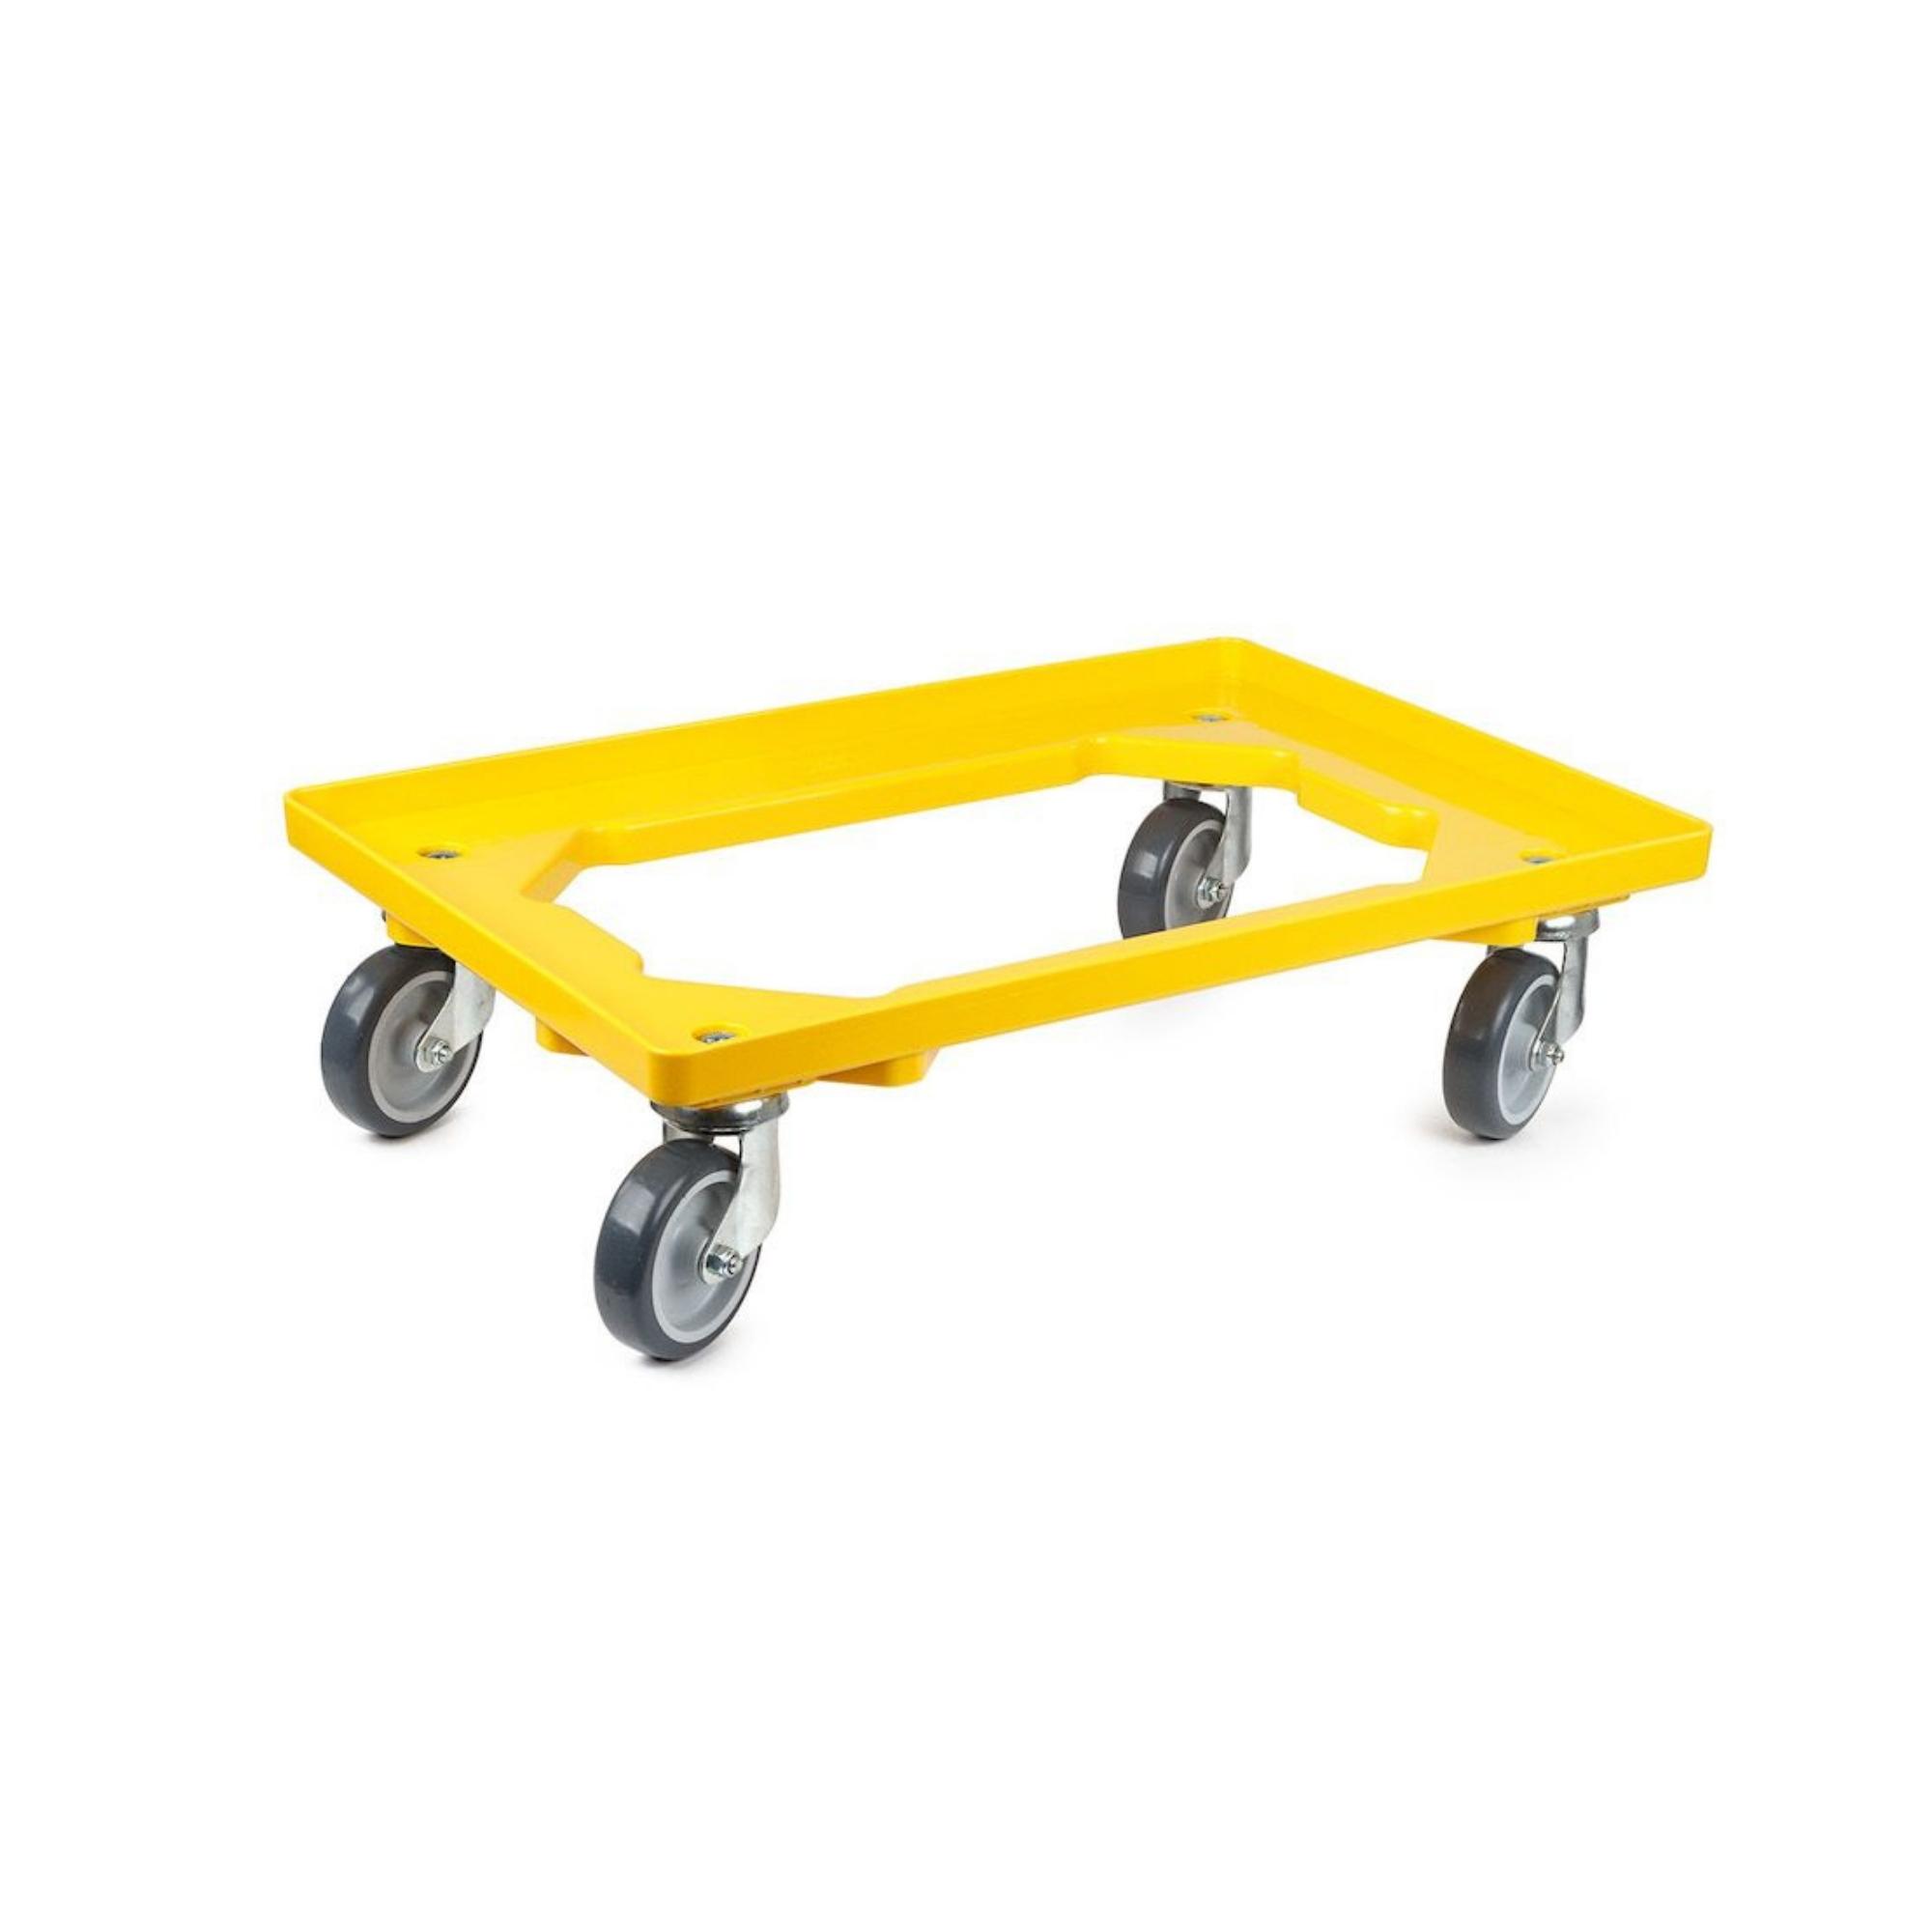 SparSet 2x Transportroller für Euroboxen 60x40cm mit Gummiräder gelb | Offenes Deck | 2 Lenkrollen & 2 Bremsrollen | Traglast 300kg | Kistenroller Logistikroller Rollwagen Profi-Fahrgestell